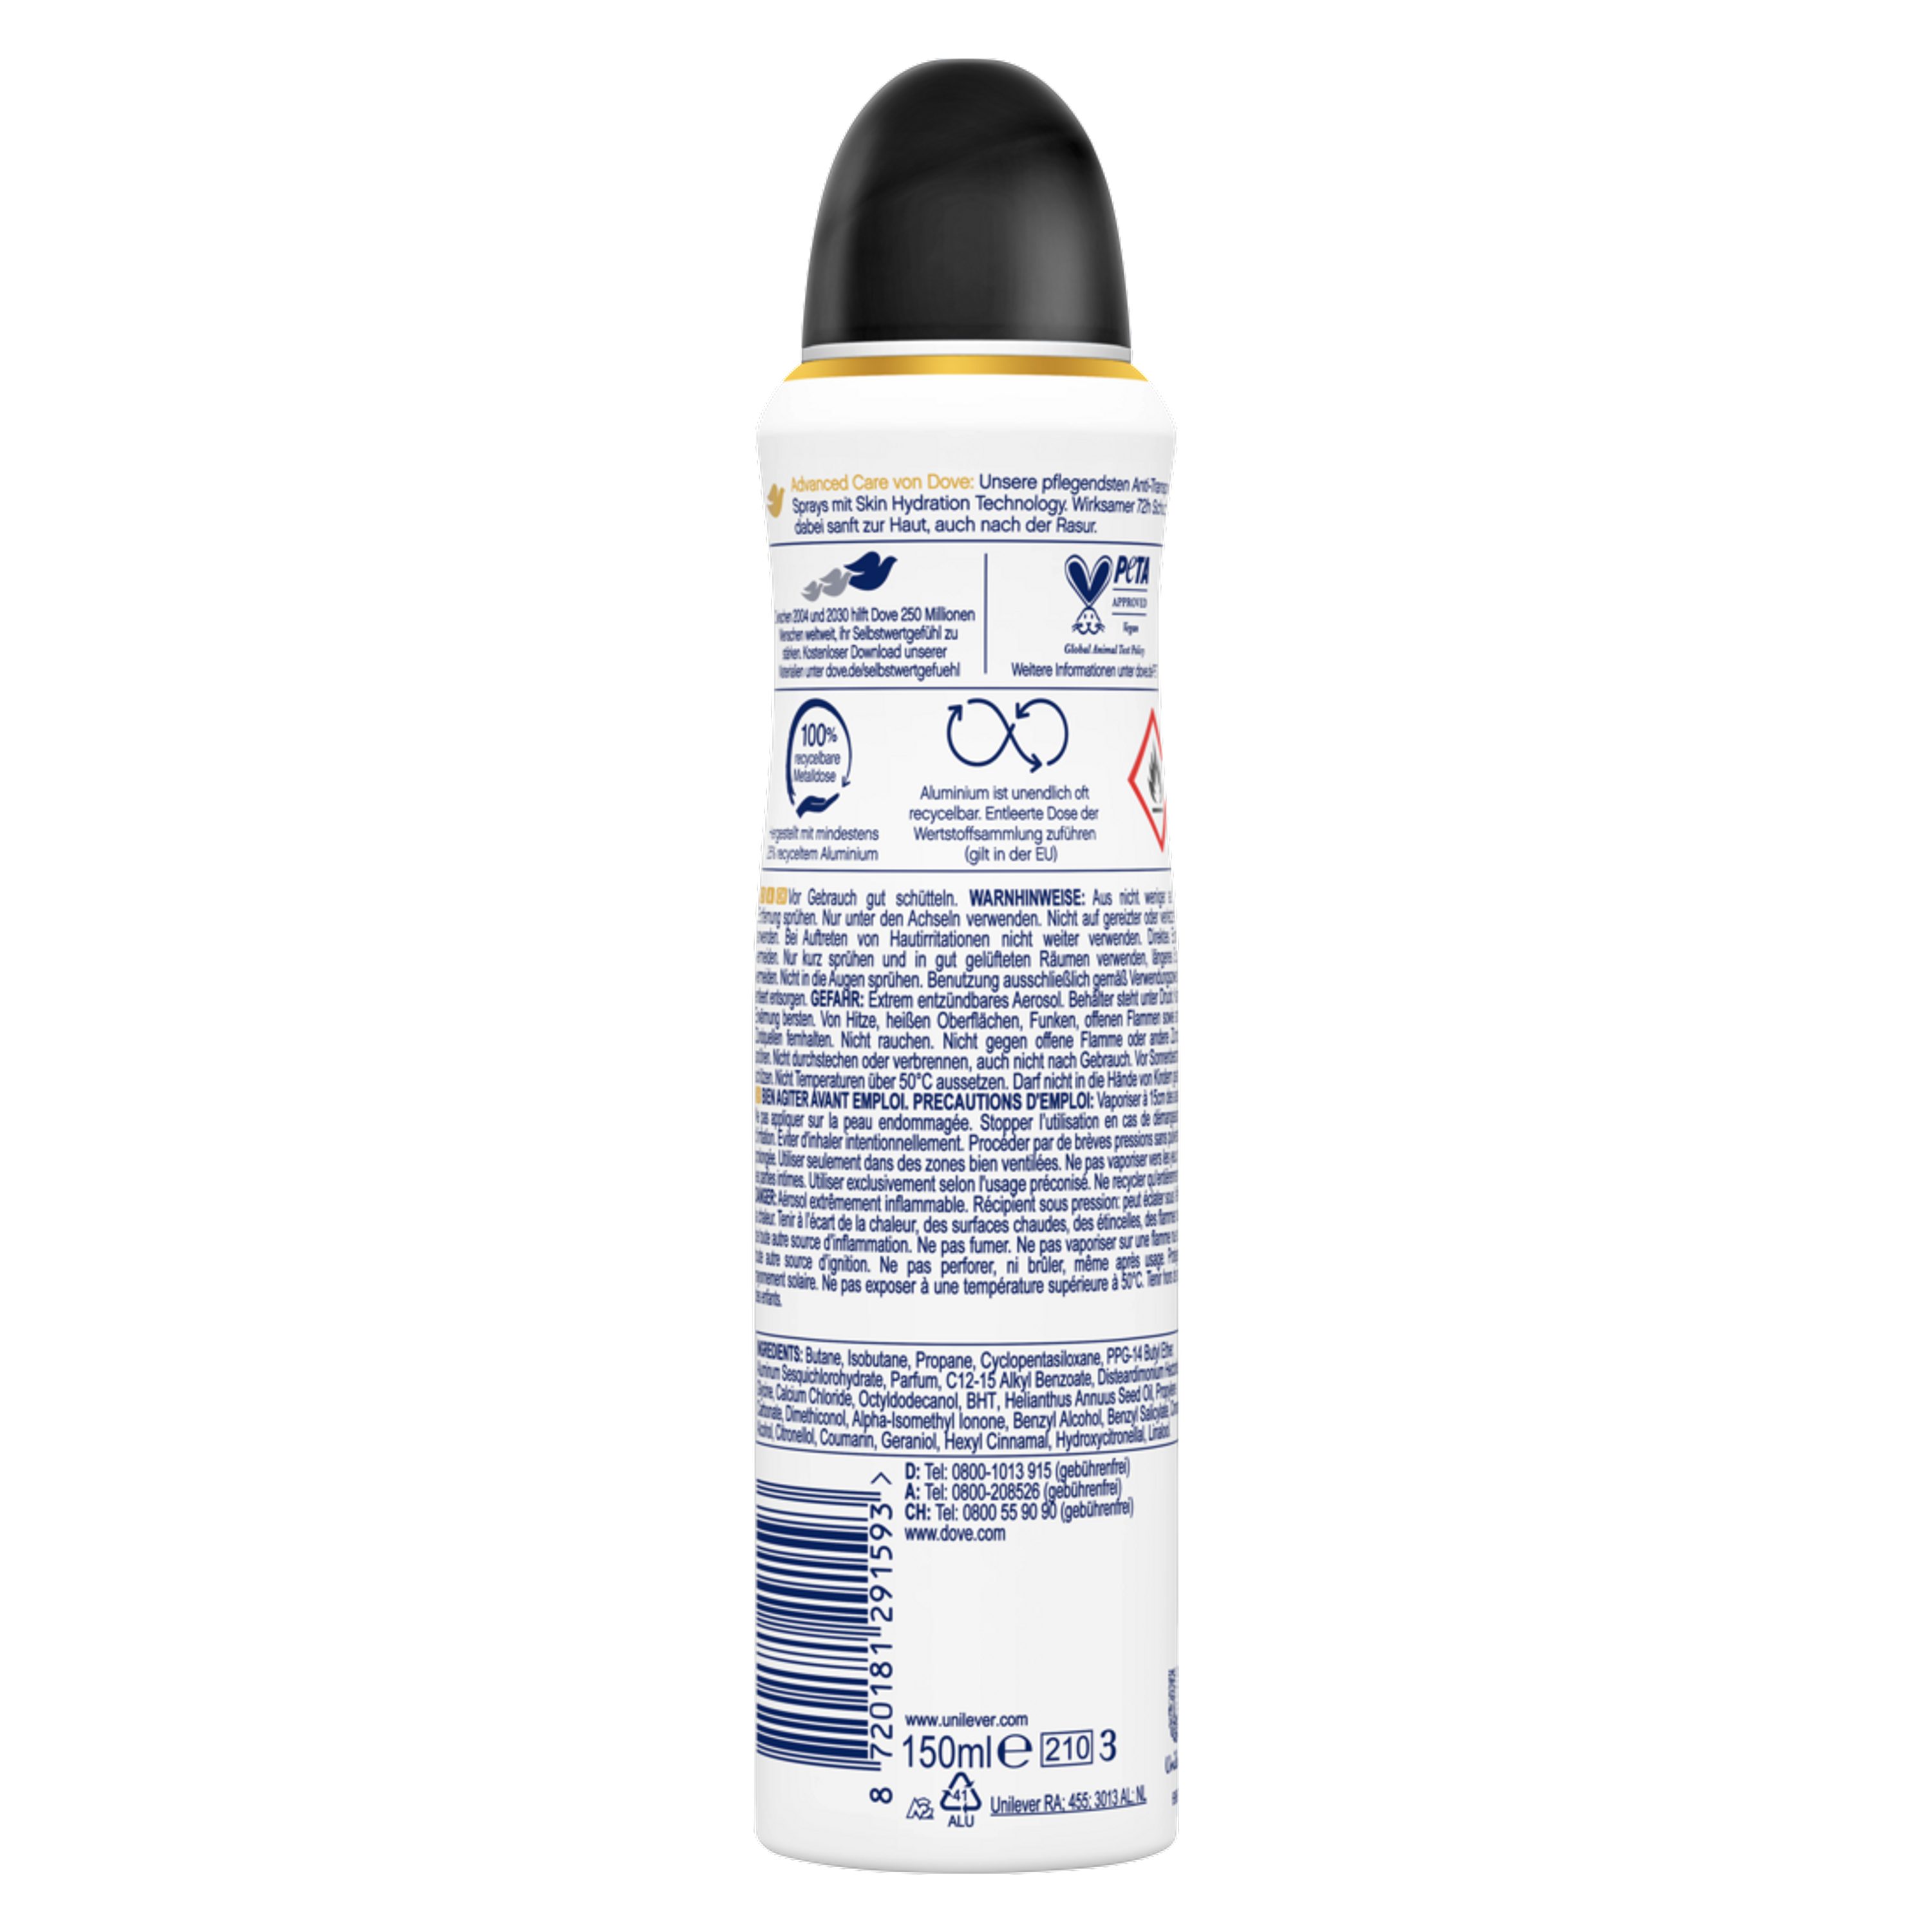 Care Deo-Set Dry Deo-Spray 6x Advanced Invisible DOVE 150ml Anti-Transpirant